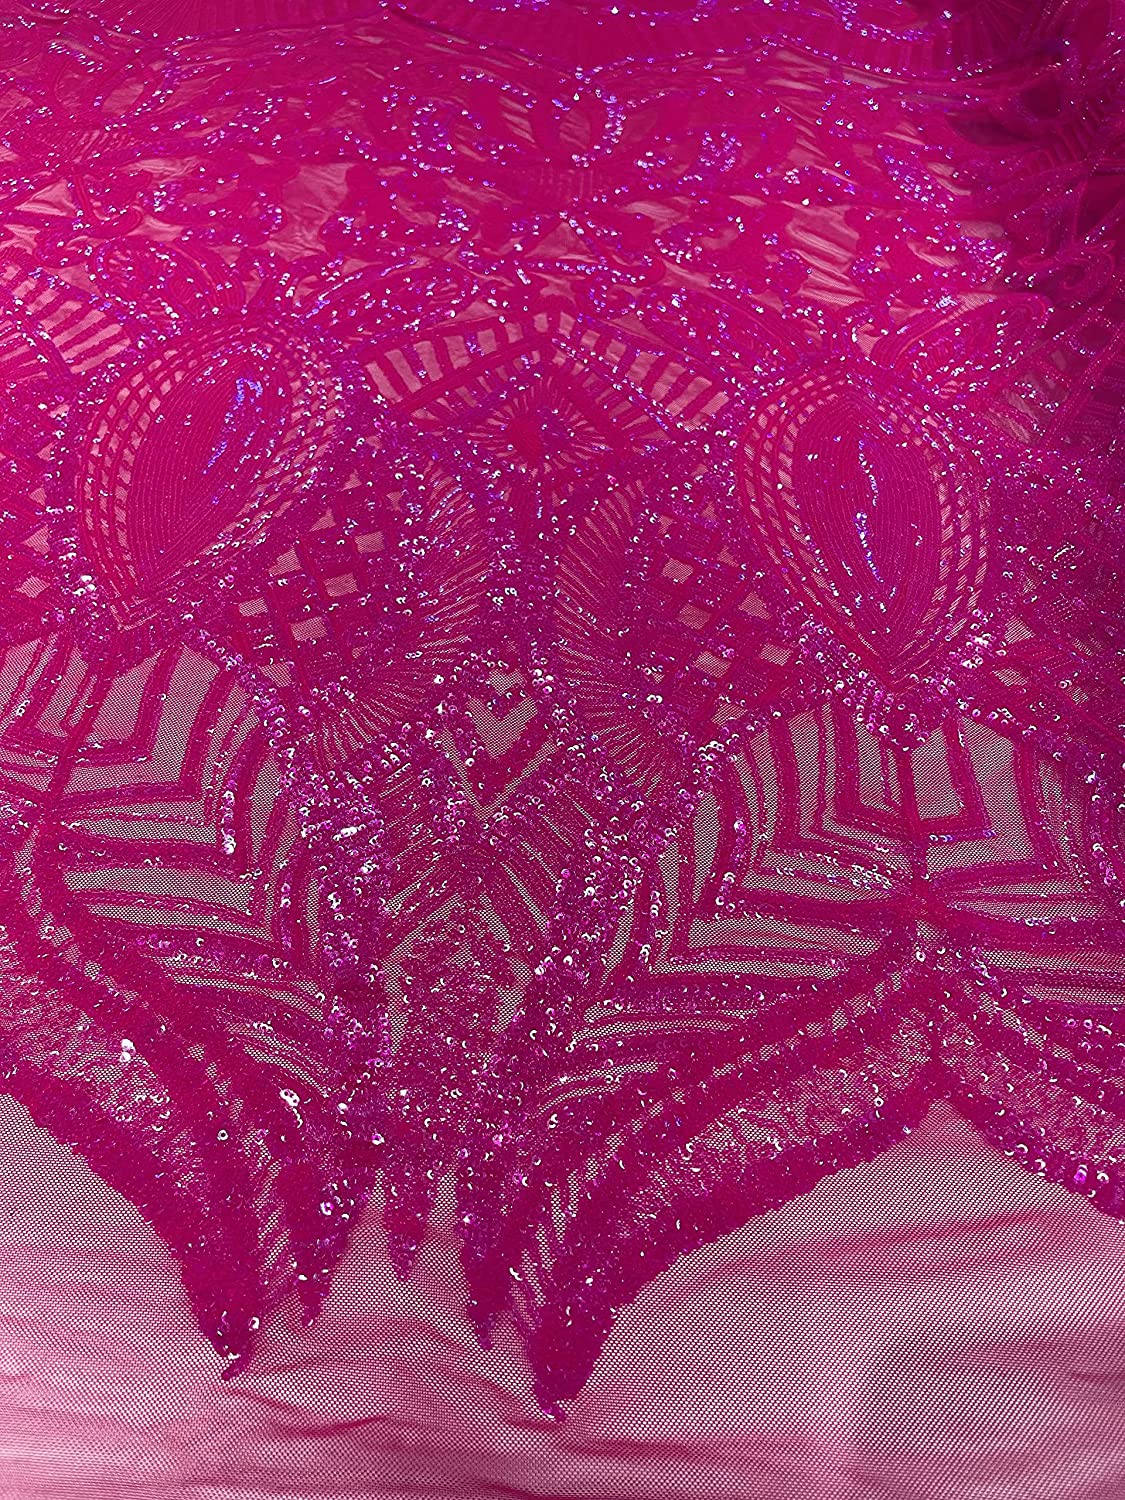 Iridescent Royalty Design On A 4 Way Stretch Mesh/Prom Fabric (1 Yard, Fuchsia on Fuchsia Mesh)